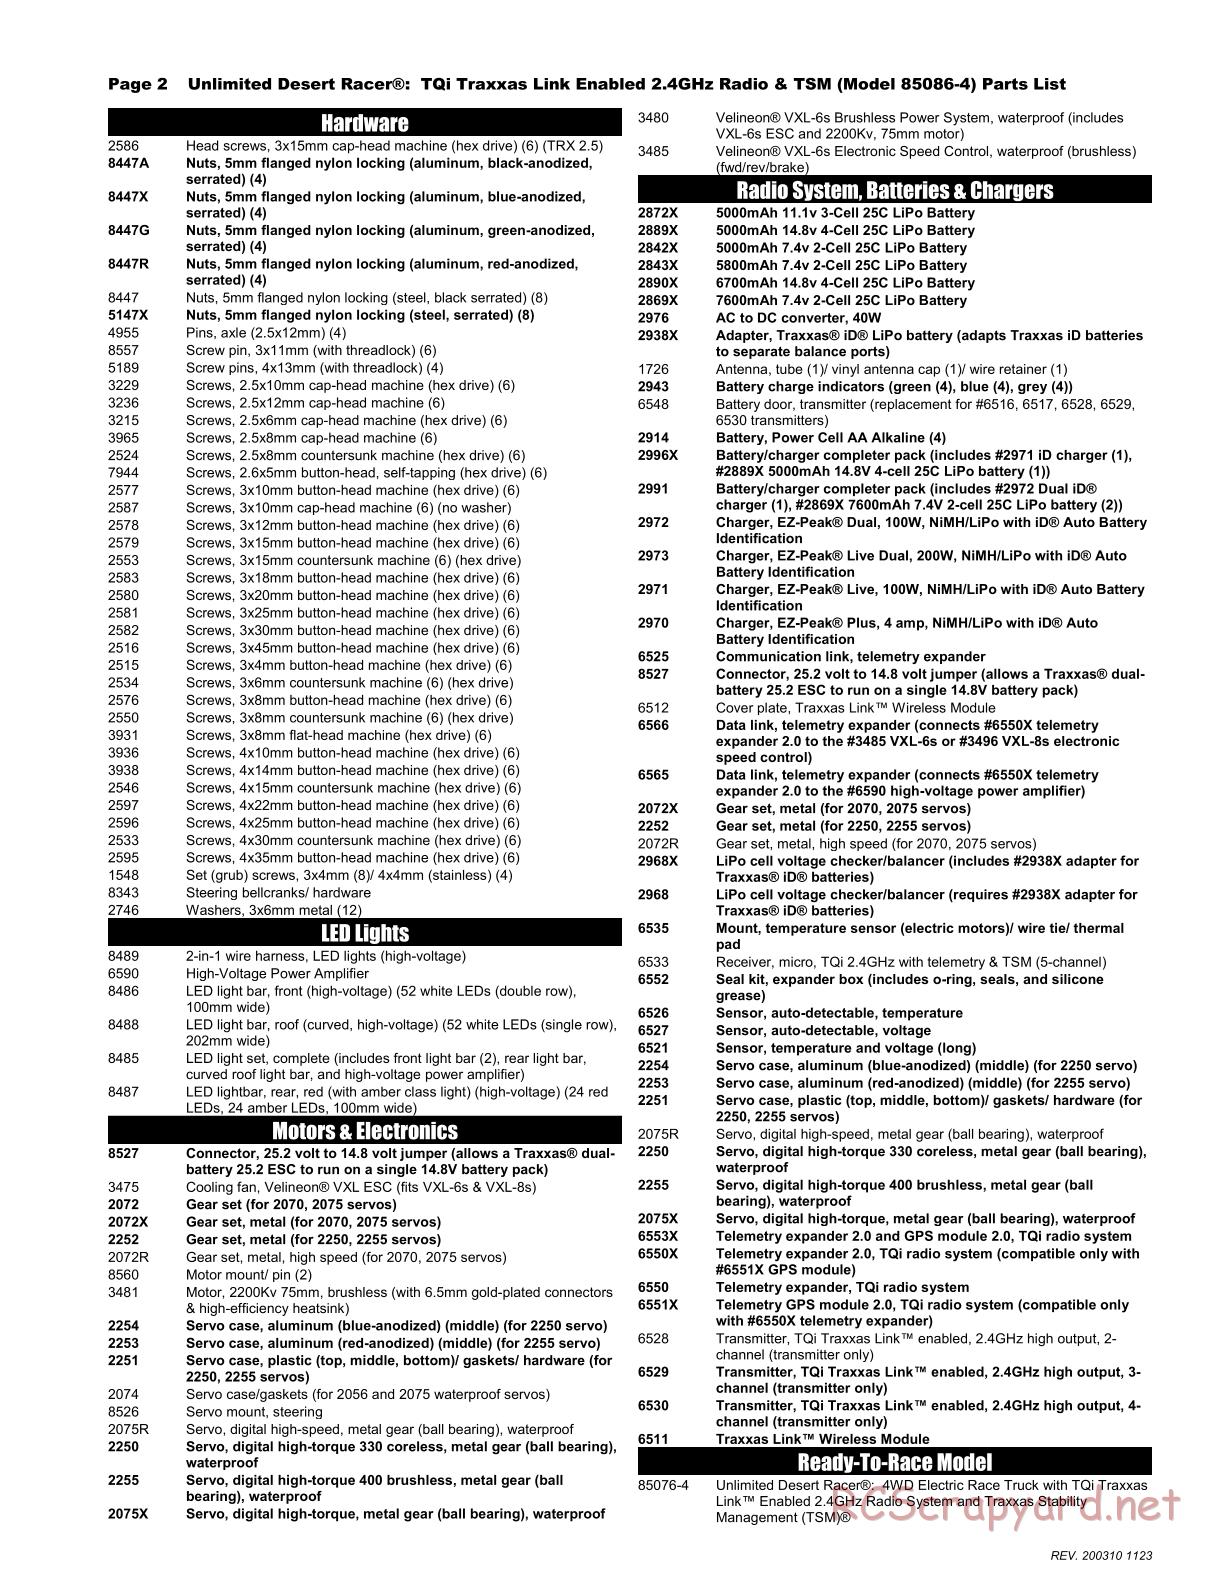 Traxxas - Unlimited Desert Racer VXL TSM - Parts List - Page 2